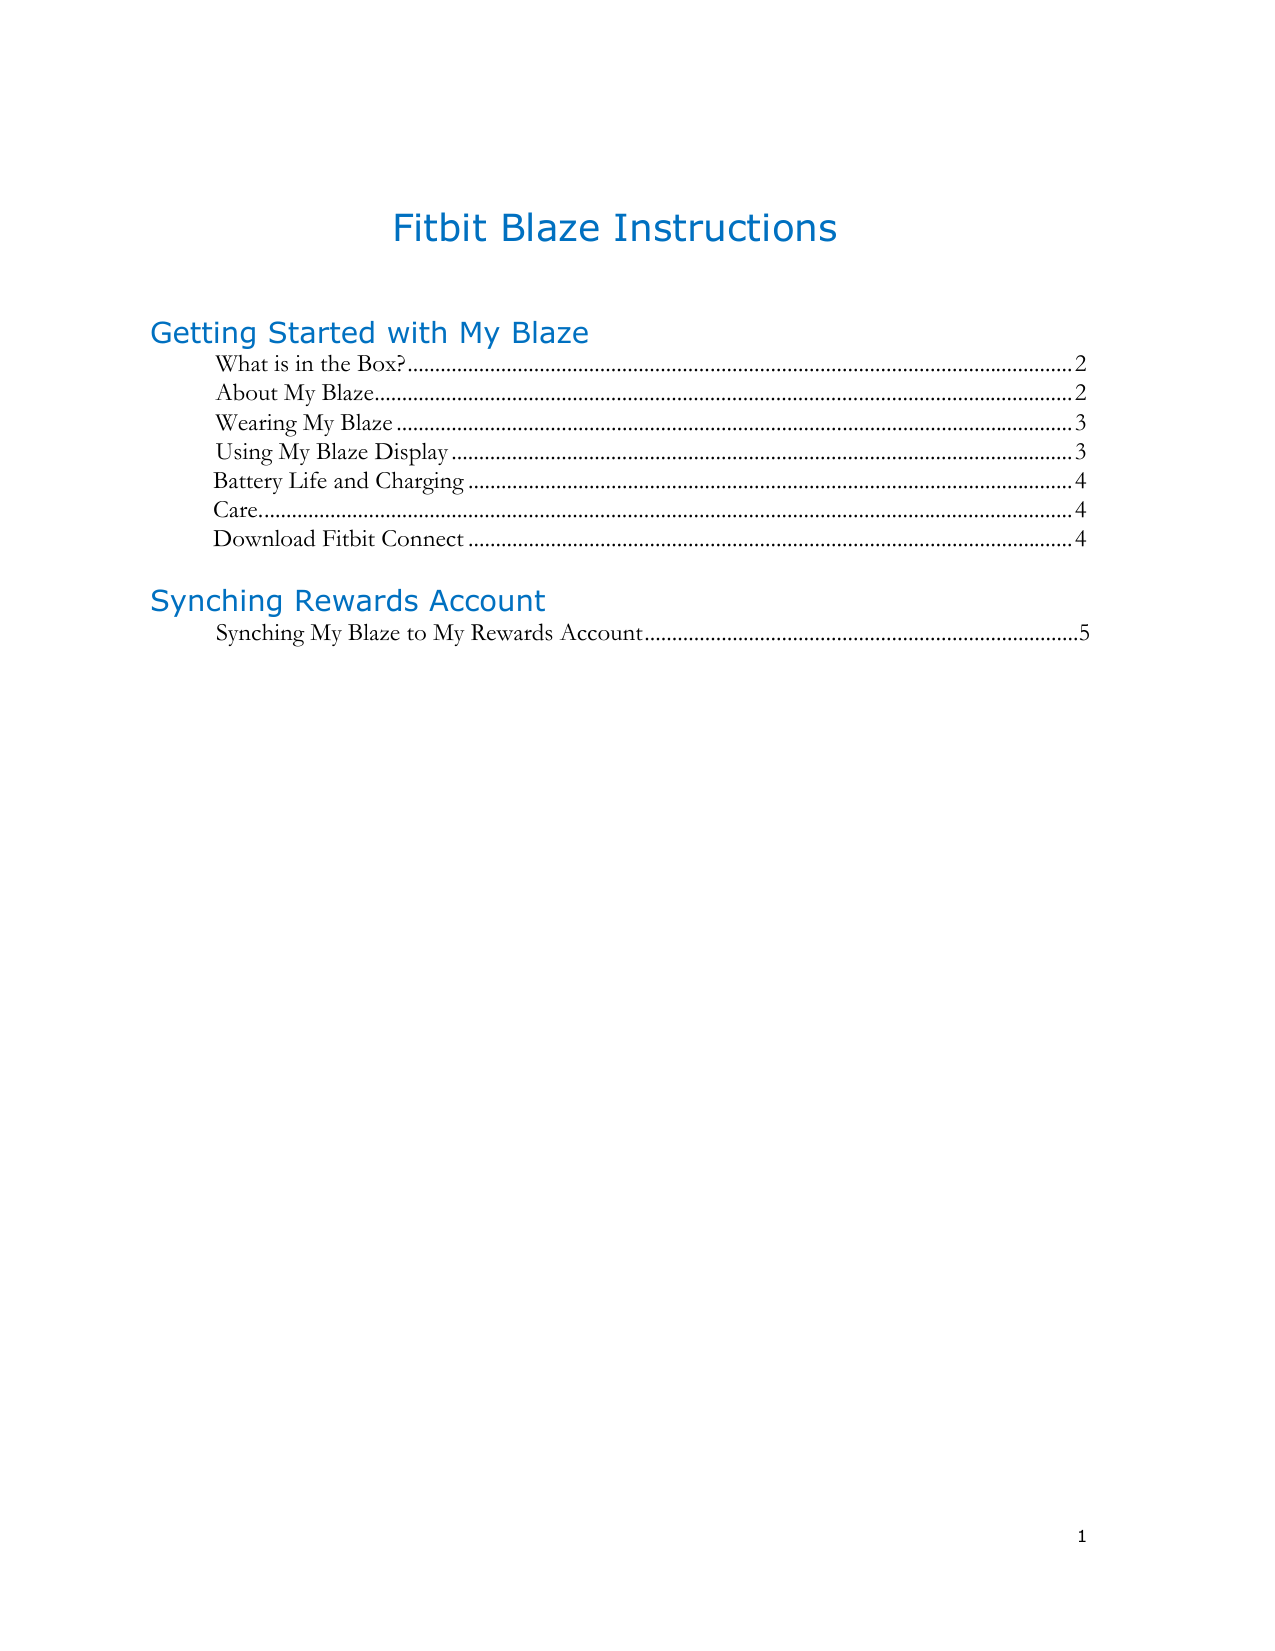 fitbit blaze instruction manual